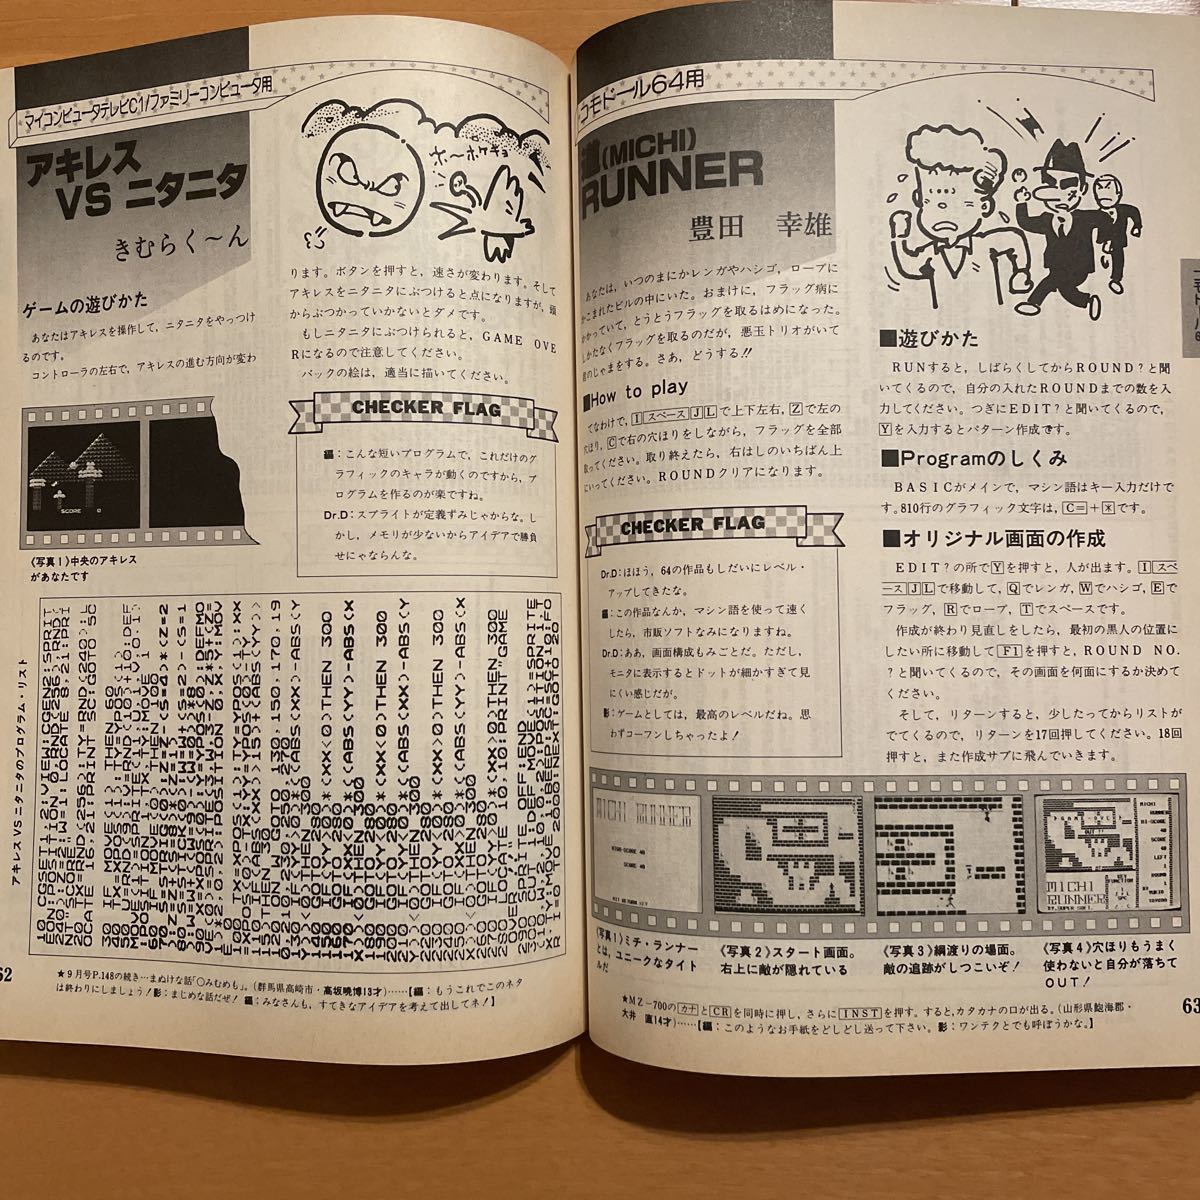  microcomputer BASIC журнал 1984 год 10 месяц номер беж maga радиоволны газета фирма 